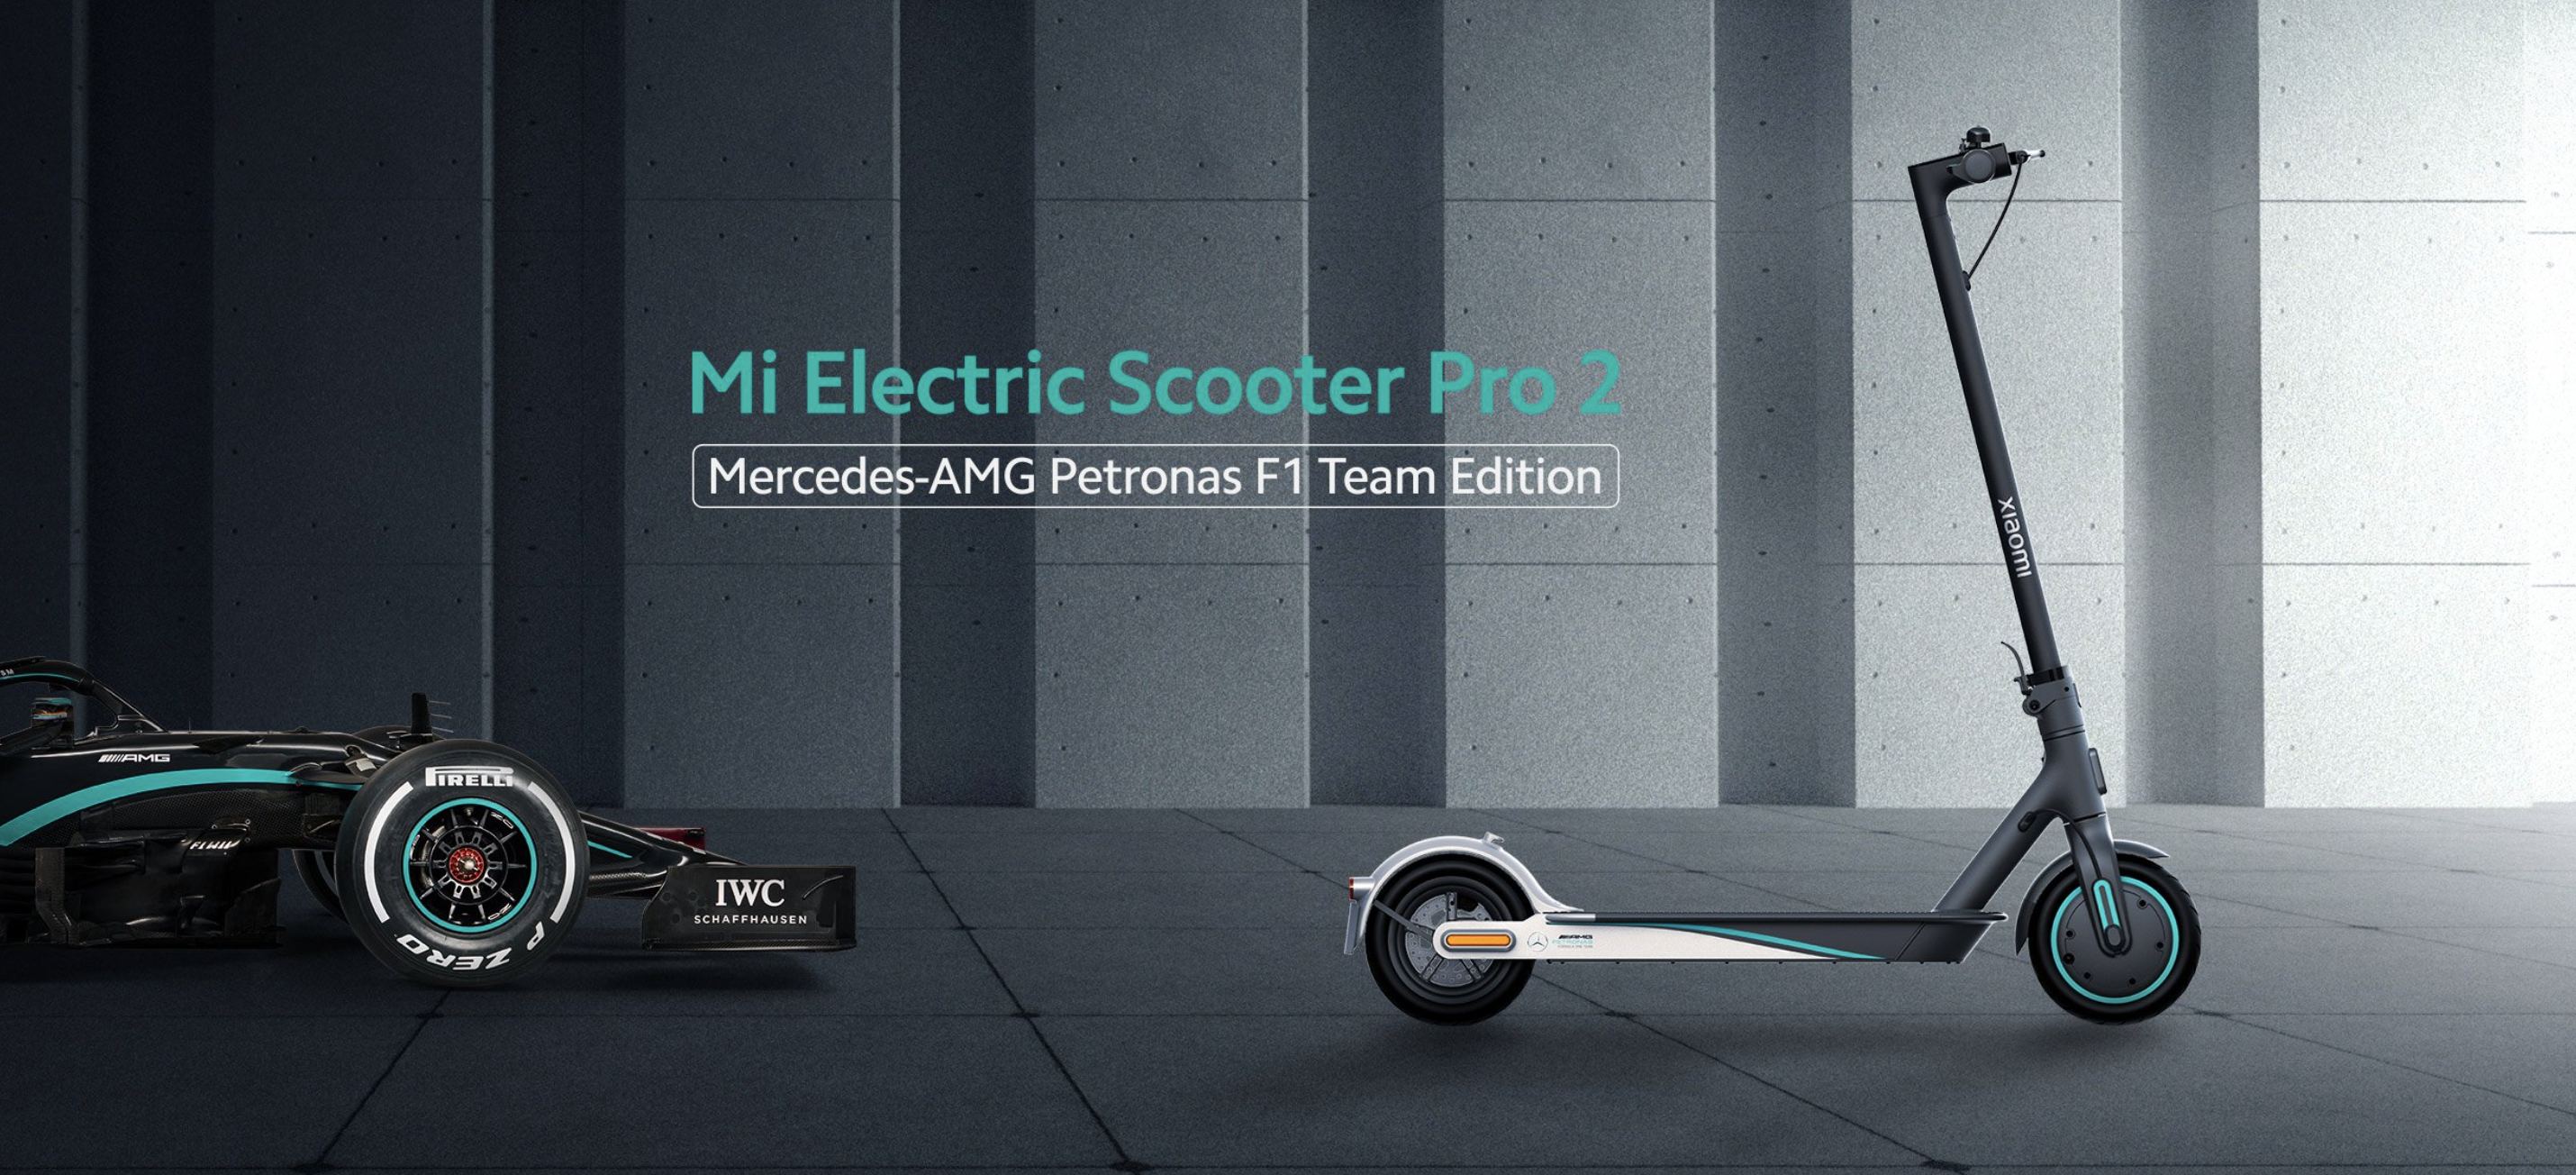 Xiaomi Mi Electric Scooter Pro 2 –